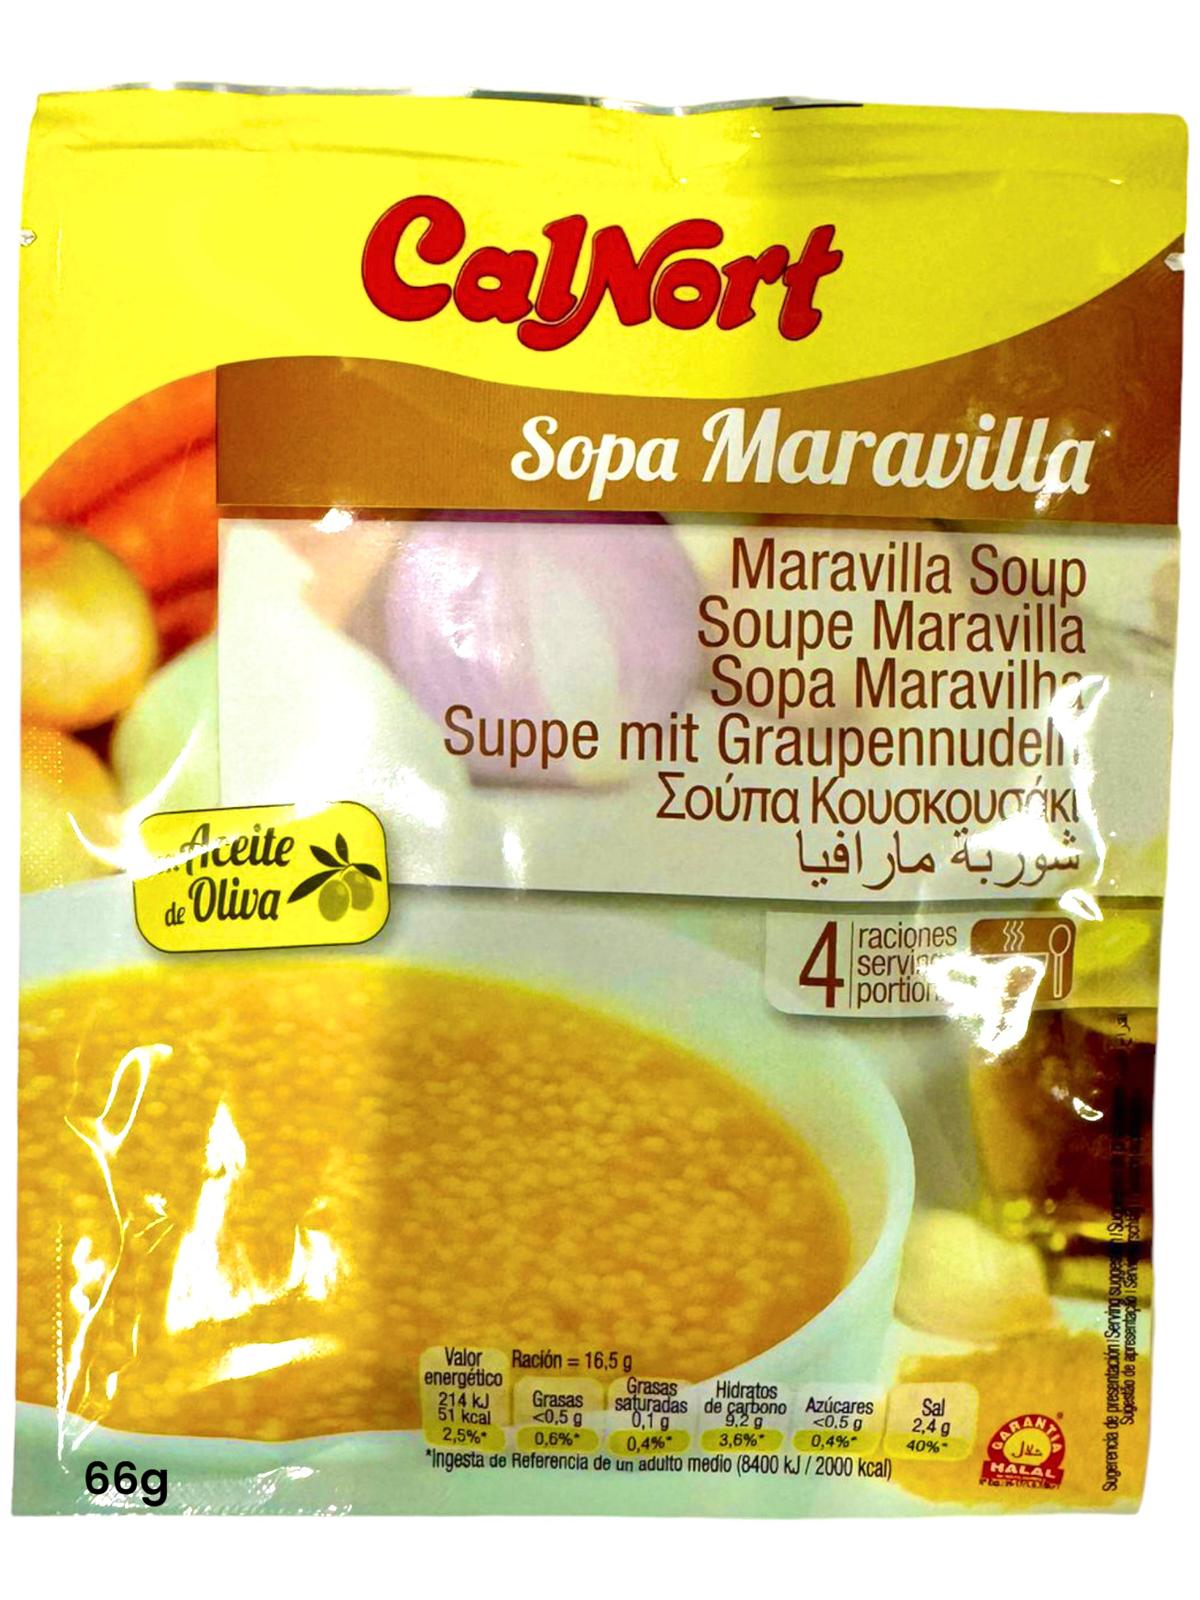 Calnort Sopa Maravilla Soup 66g